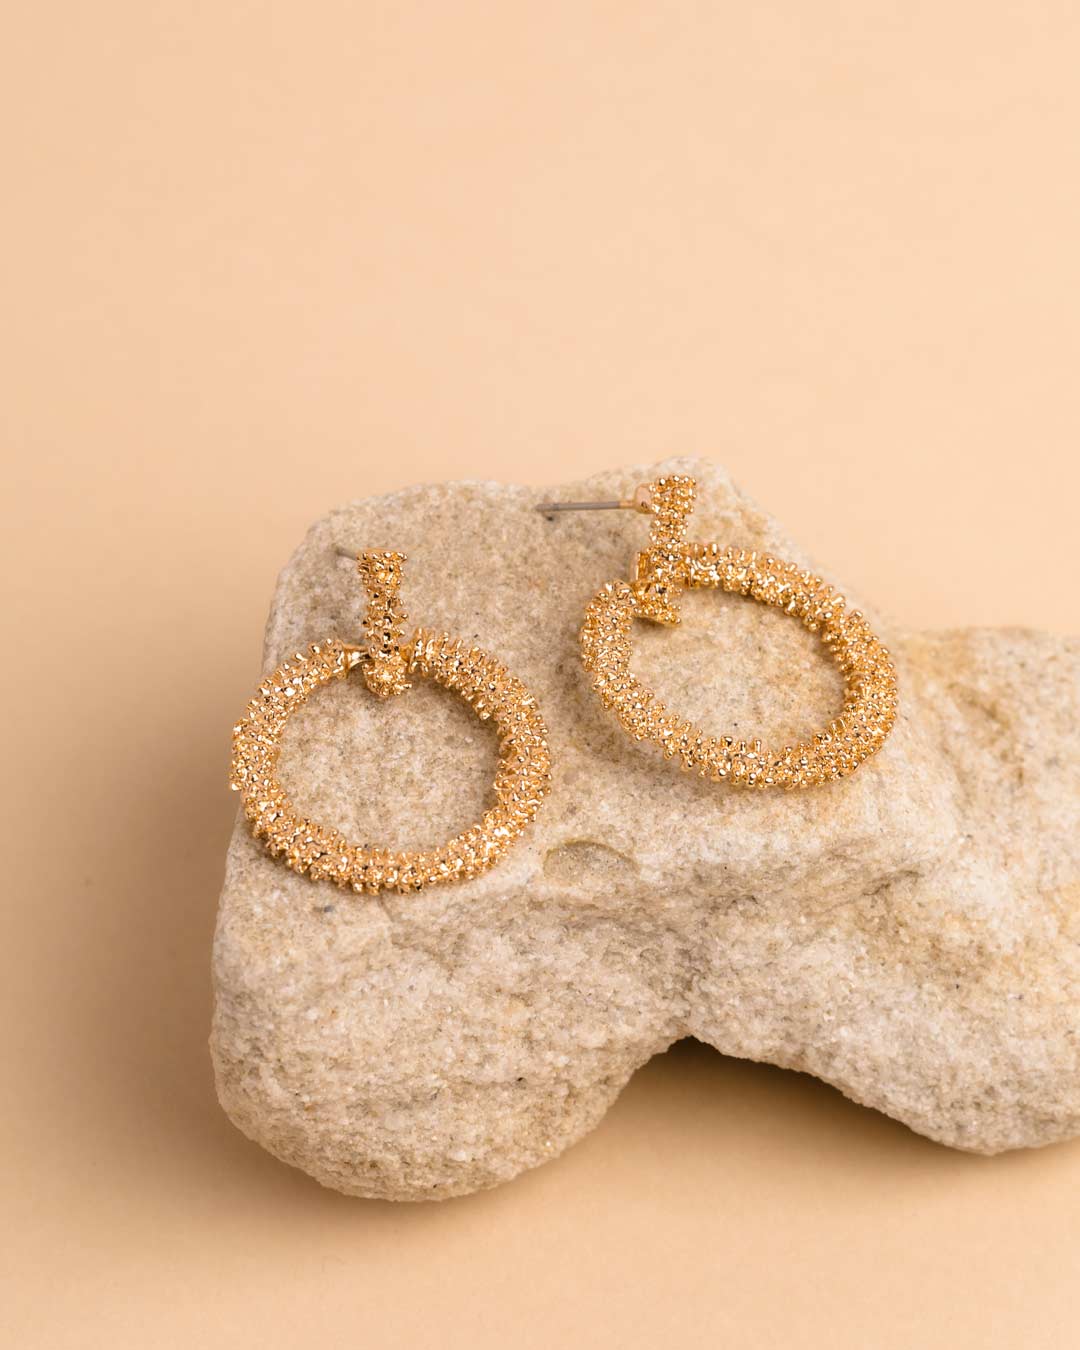 Gold Ruffled Texture Creole Drop Earrings